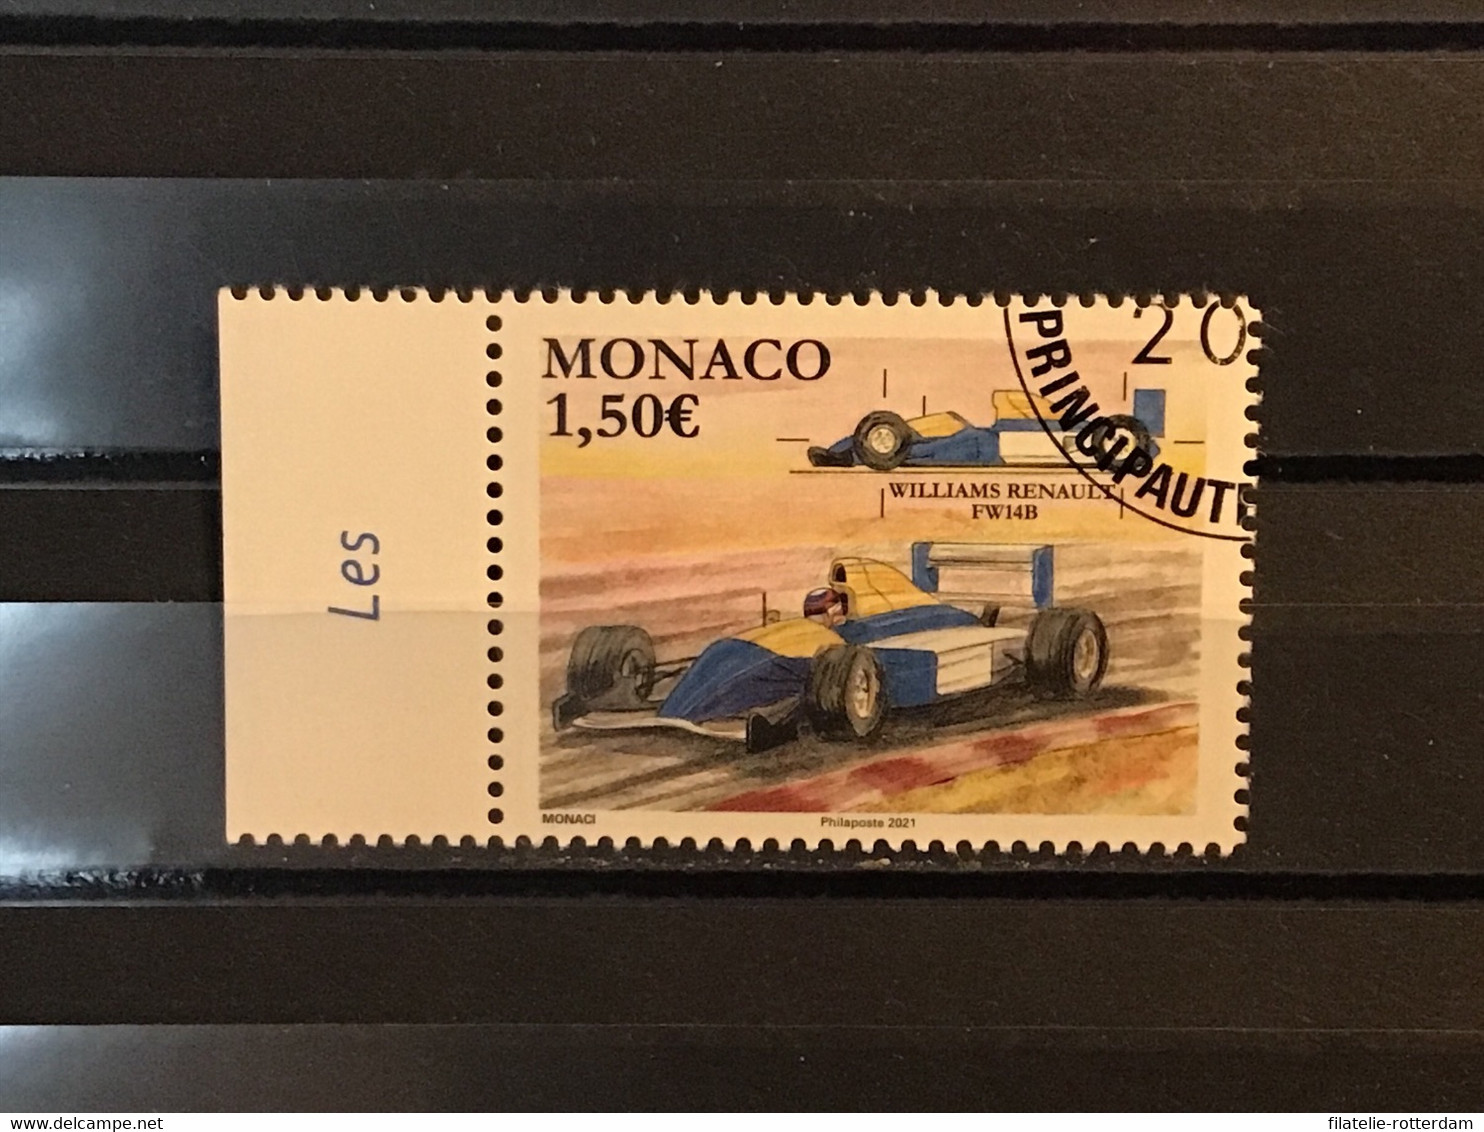 Monaco - Formule 1, Grand Prix Monaco (1.50) 2021 - Usados